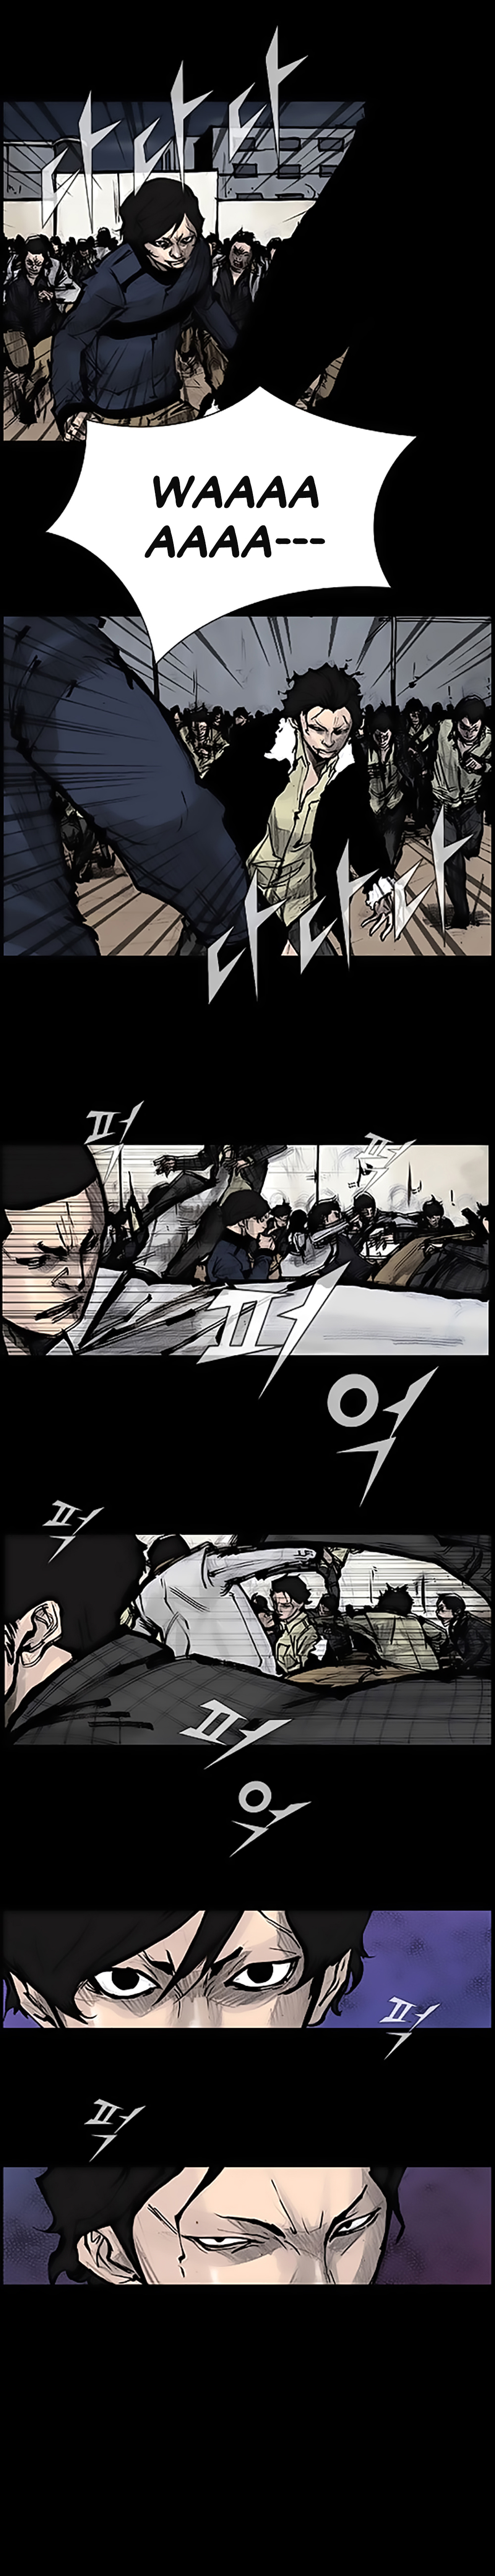 Dokgo Rewind kỳ 17 trang 7